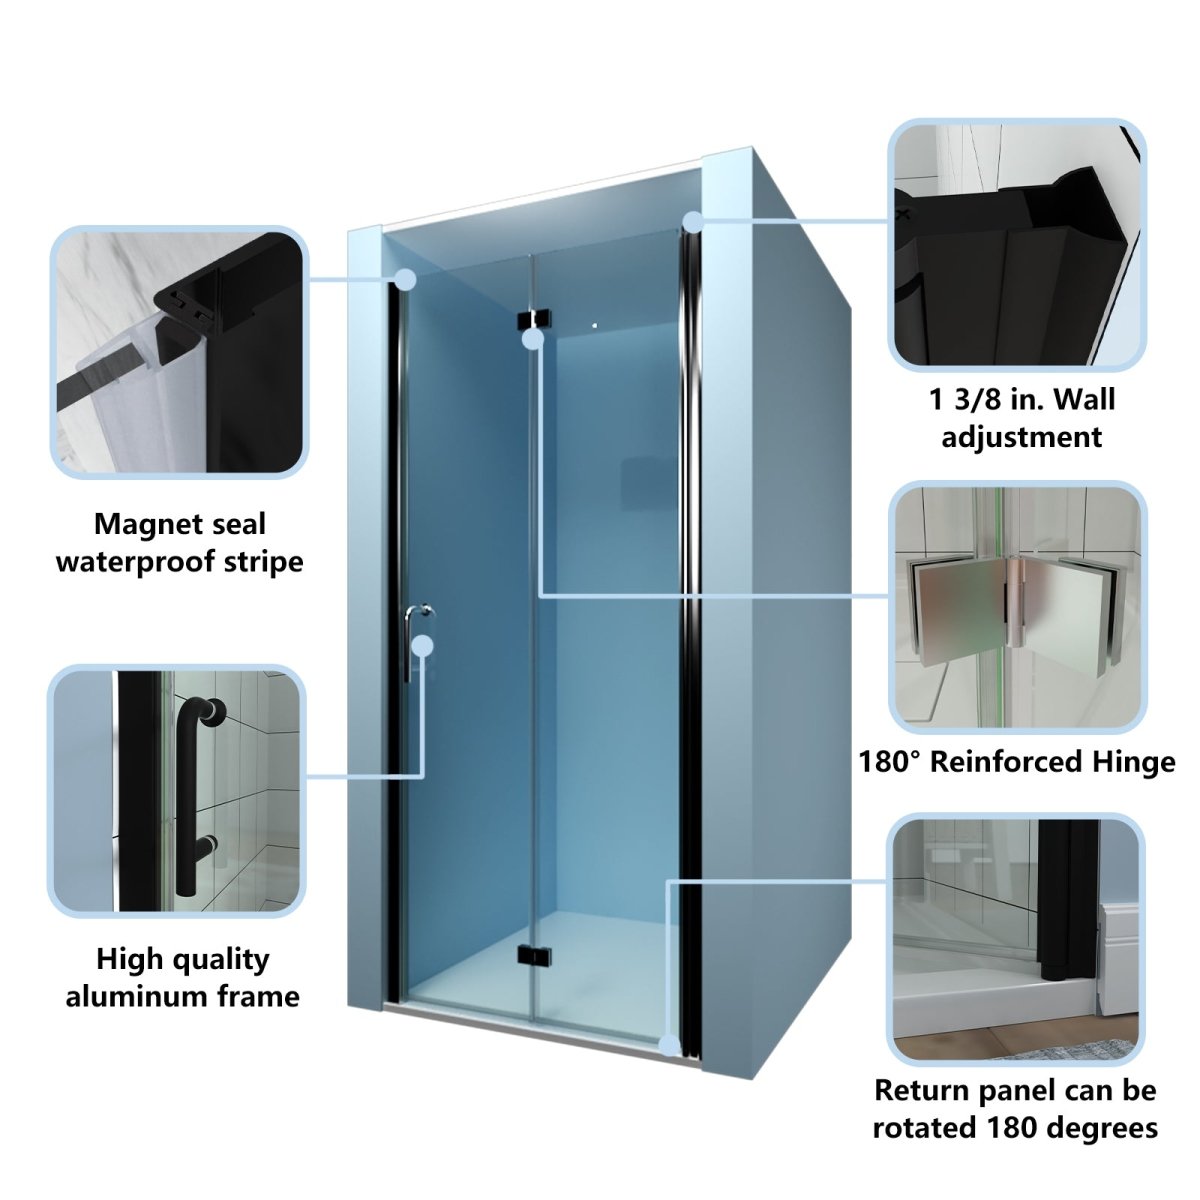 Adapt 34-35 1/2" W x 72" H Folding Semi-Frameless Swing Hinged Shower Doors in Black